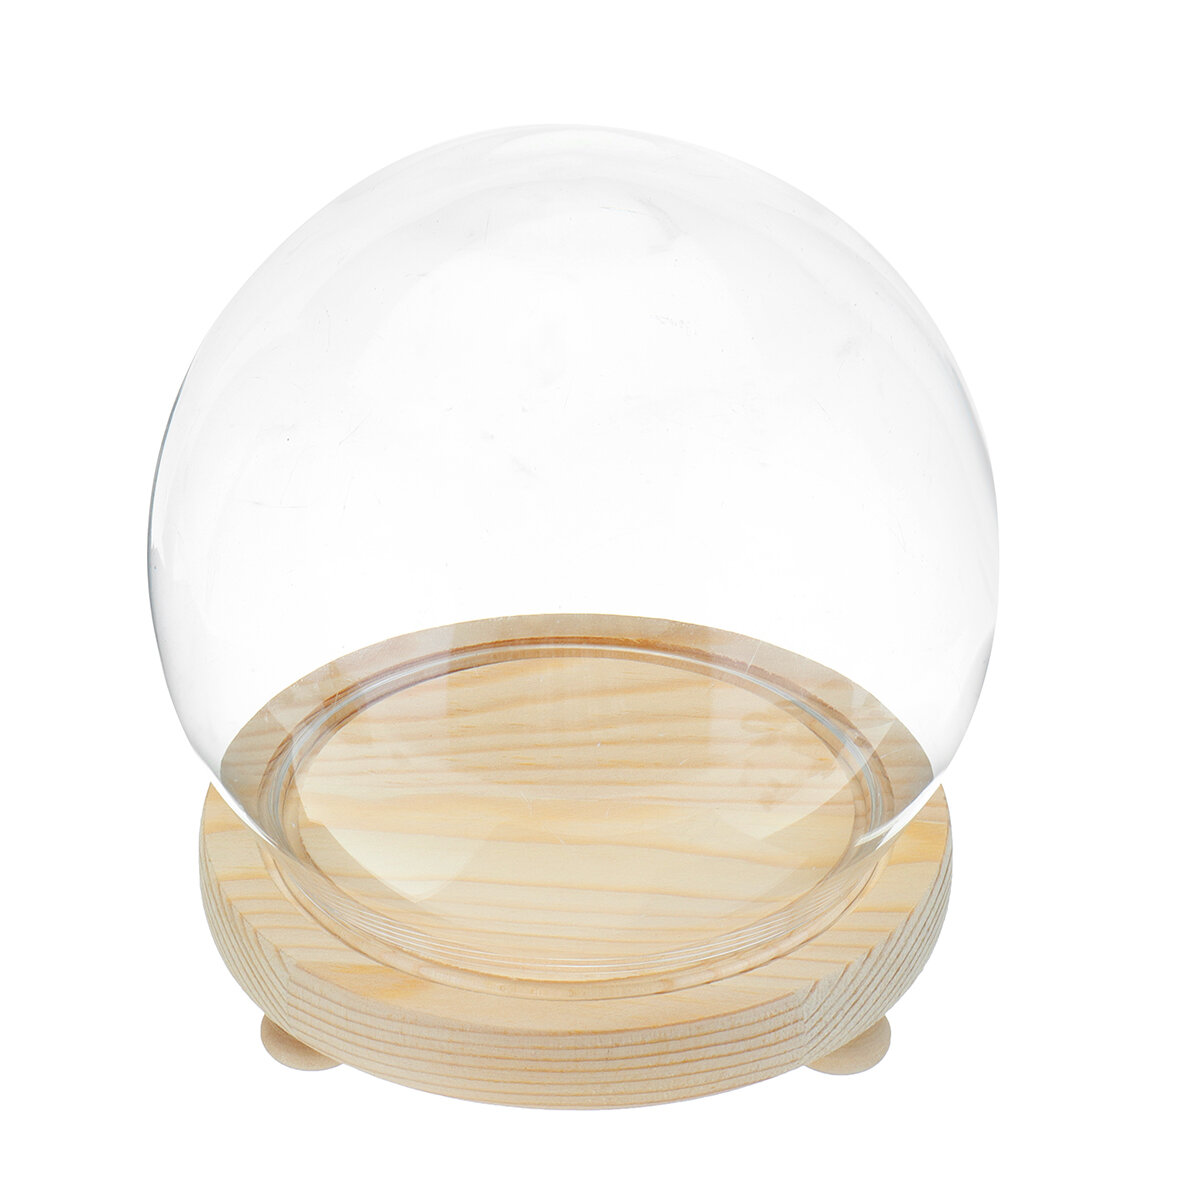 Ronde decoratieve transparant glas Dome met houten basis cloche bell jar